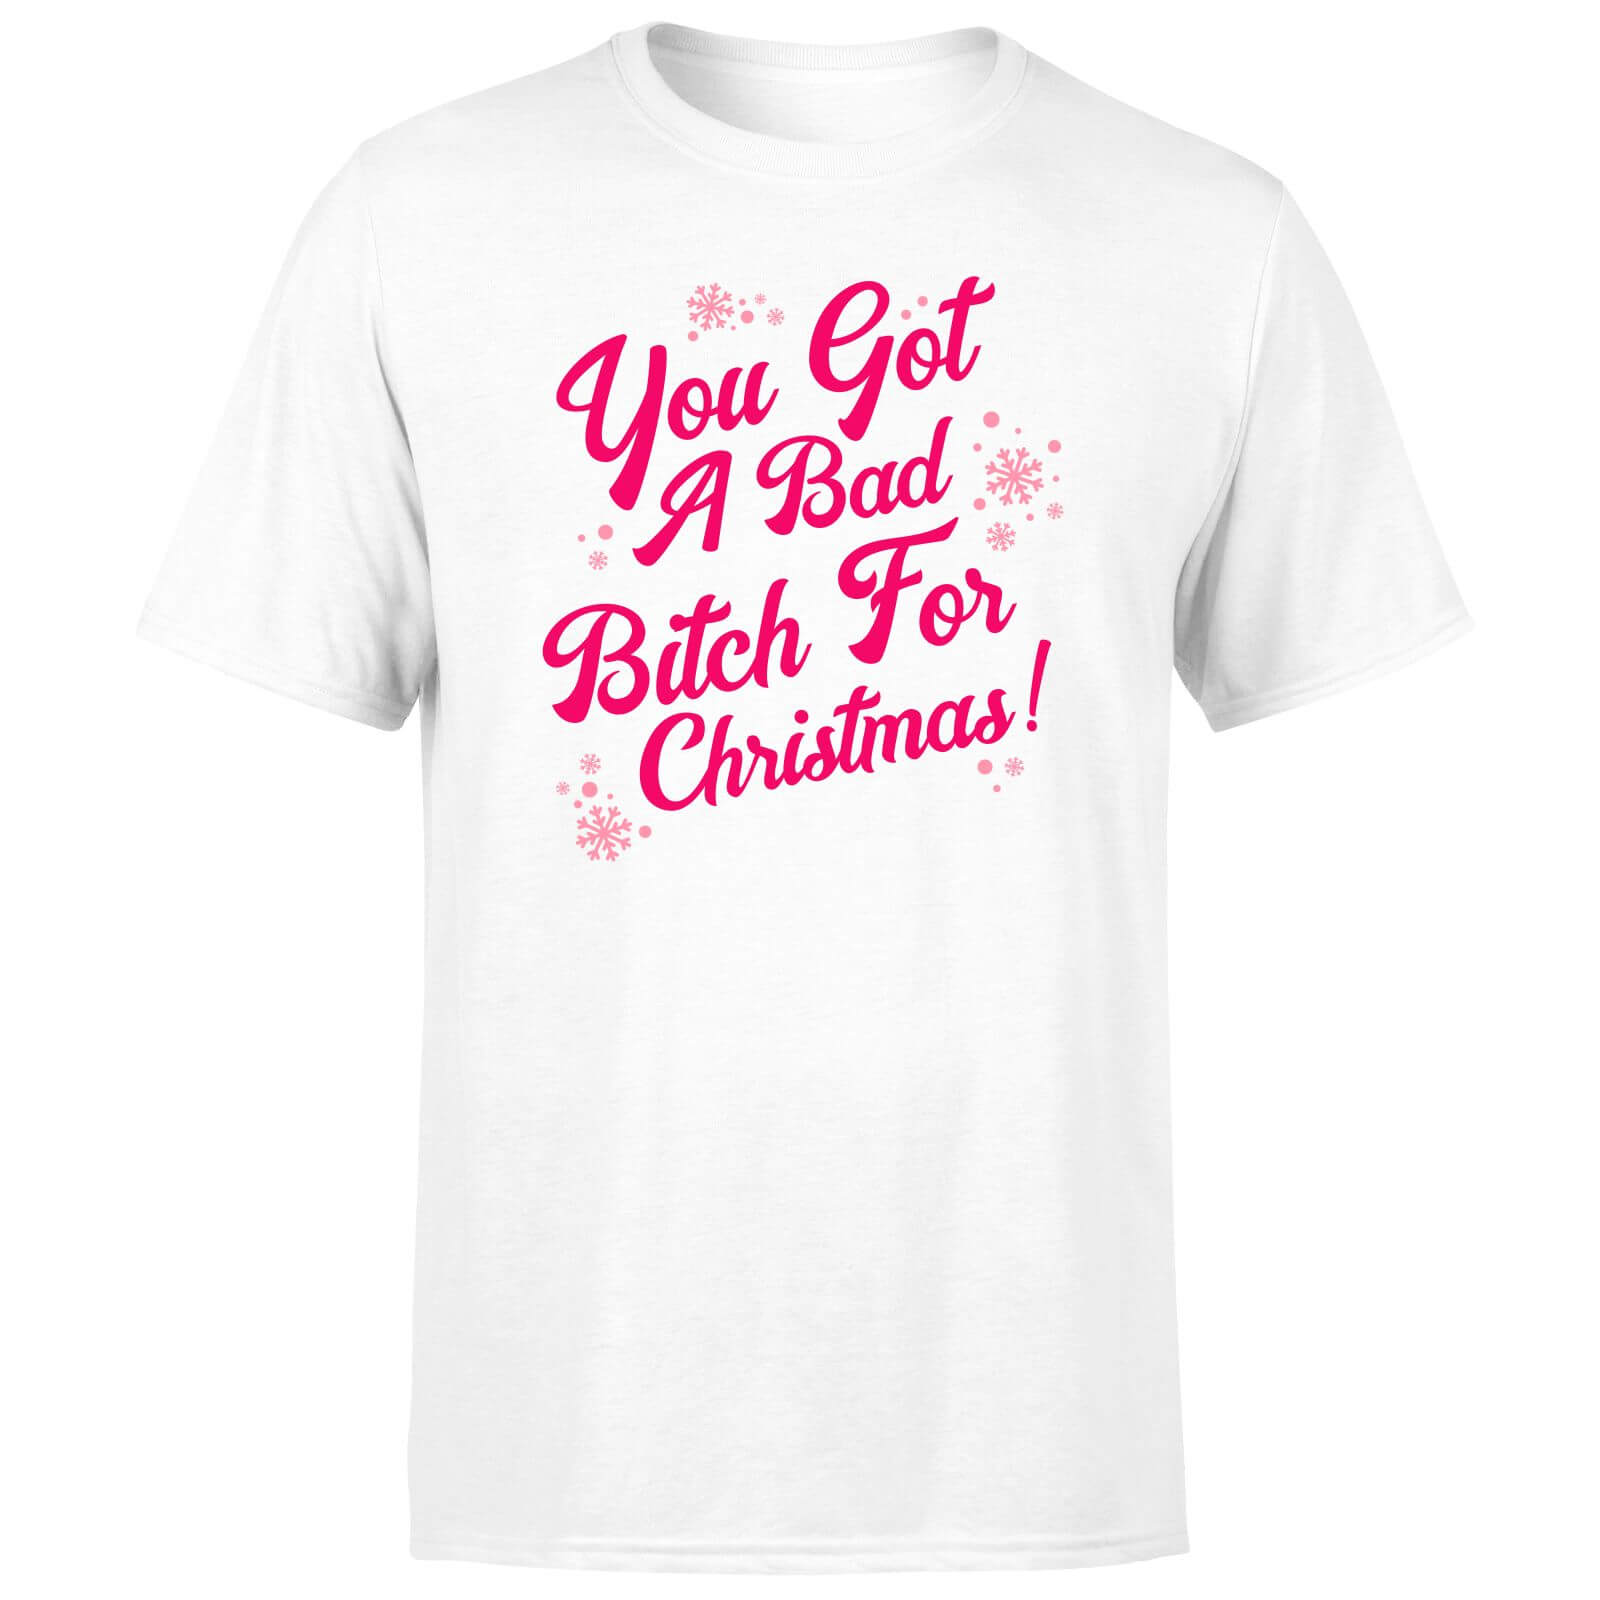 Snowy You Got A Bad Bitch For Christmas Men's T-Shirt - White - XS - White